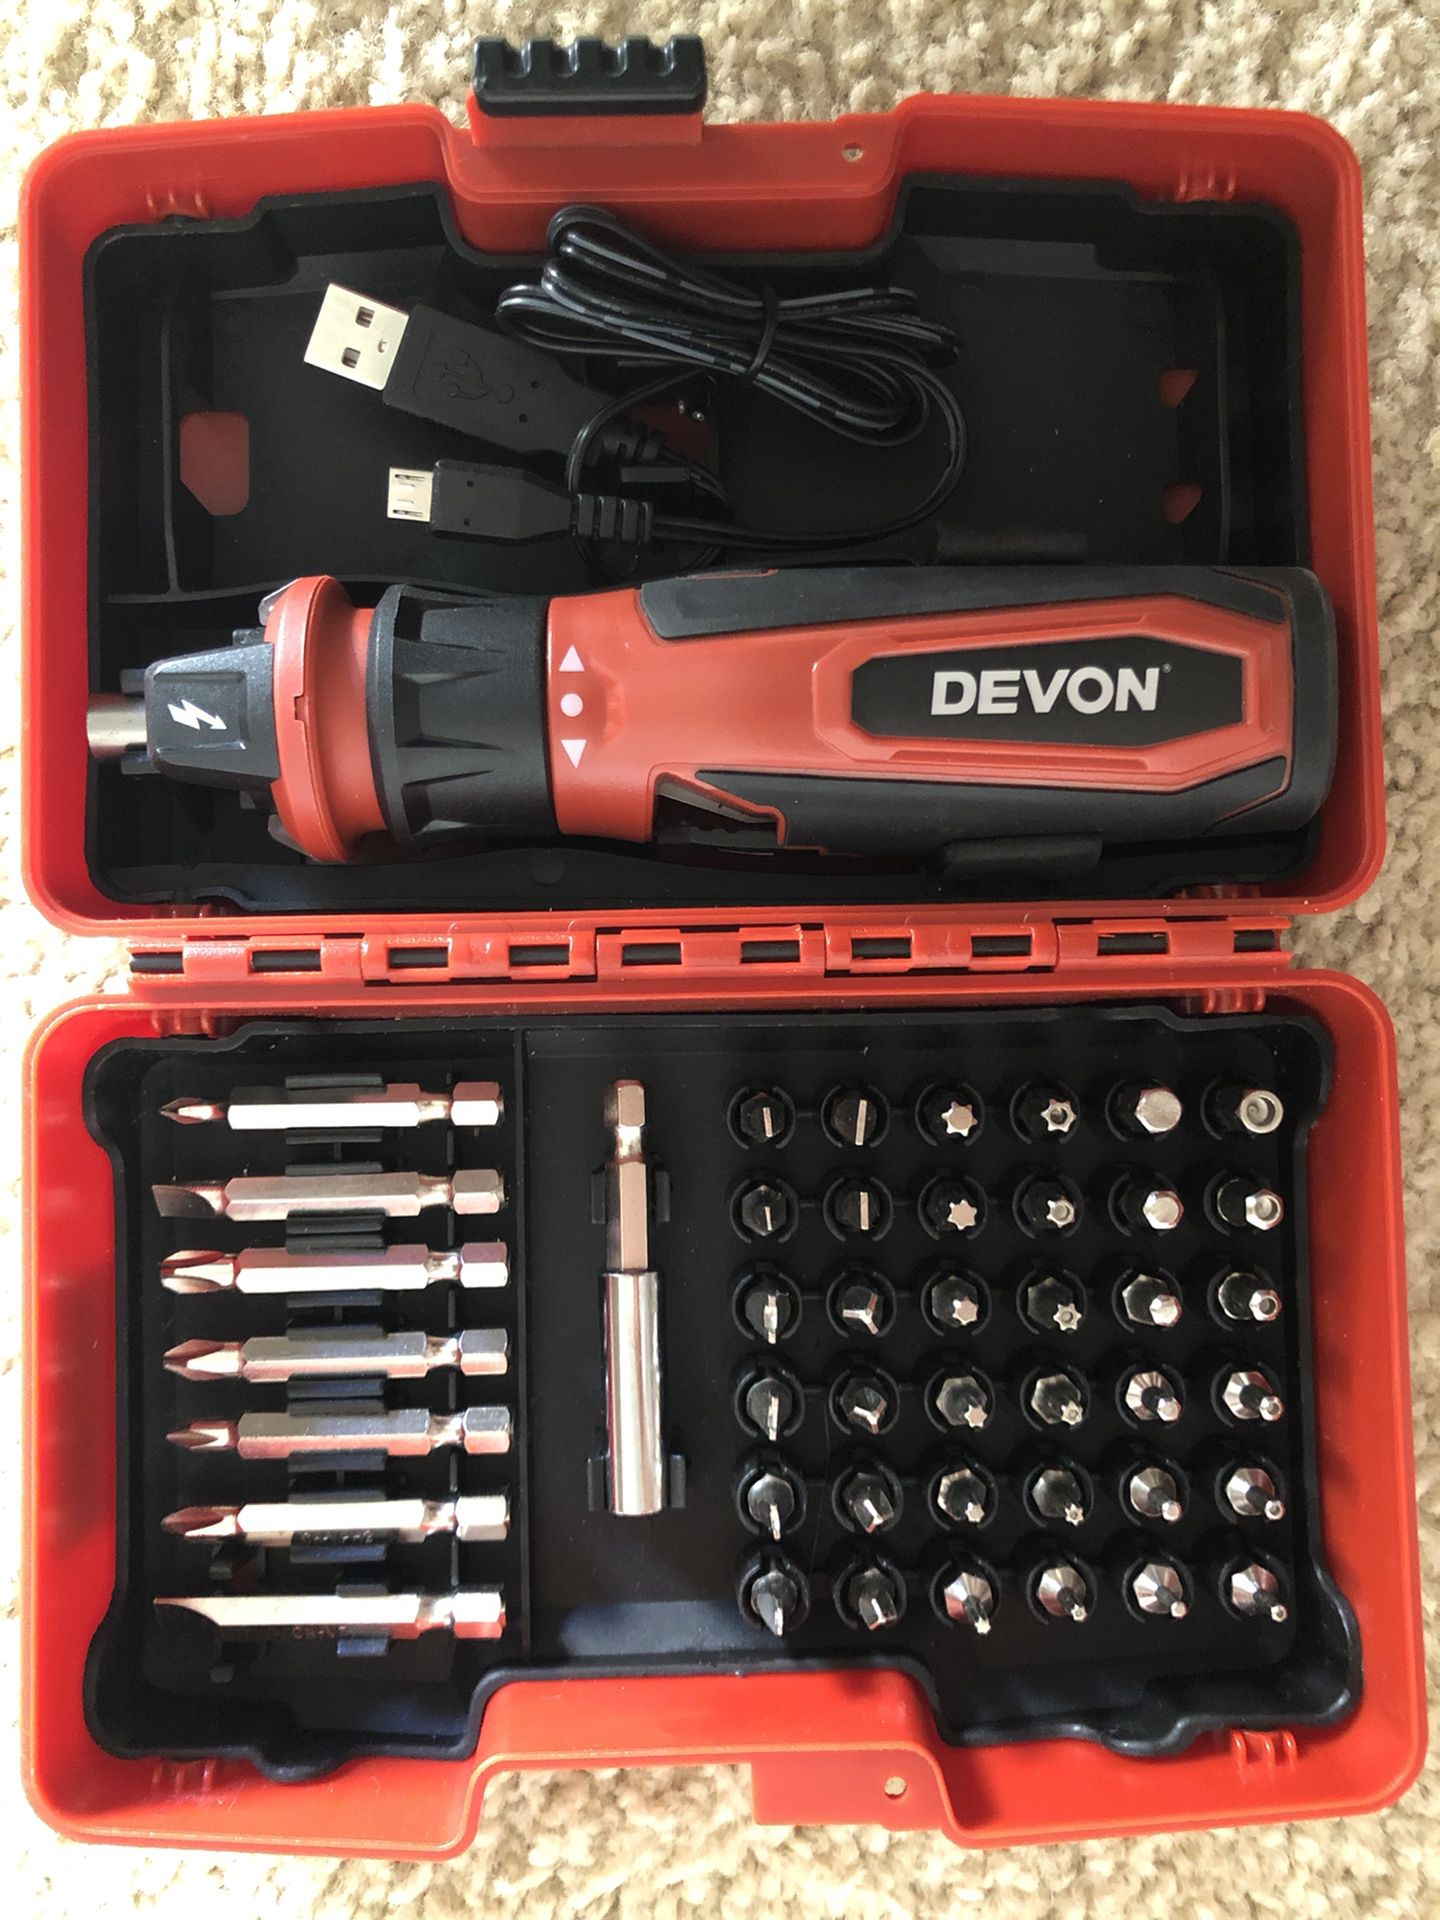 Devon multifunctional electric screwdriver